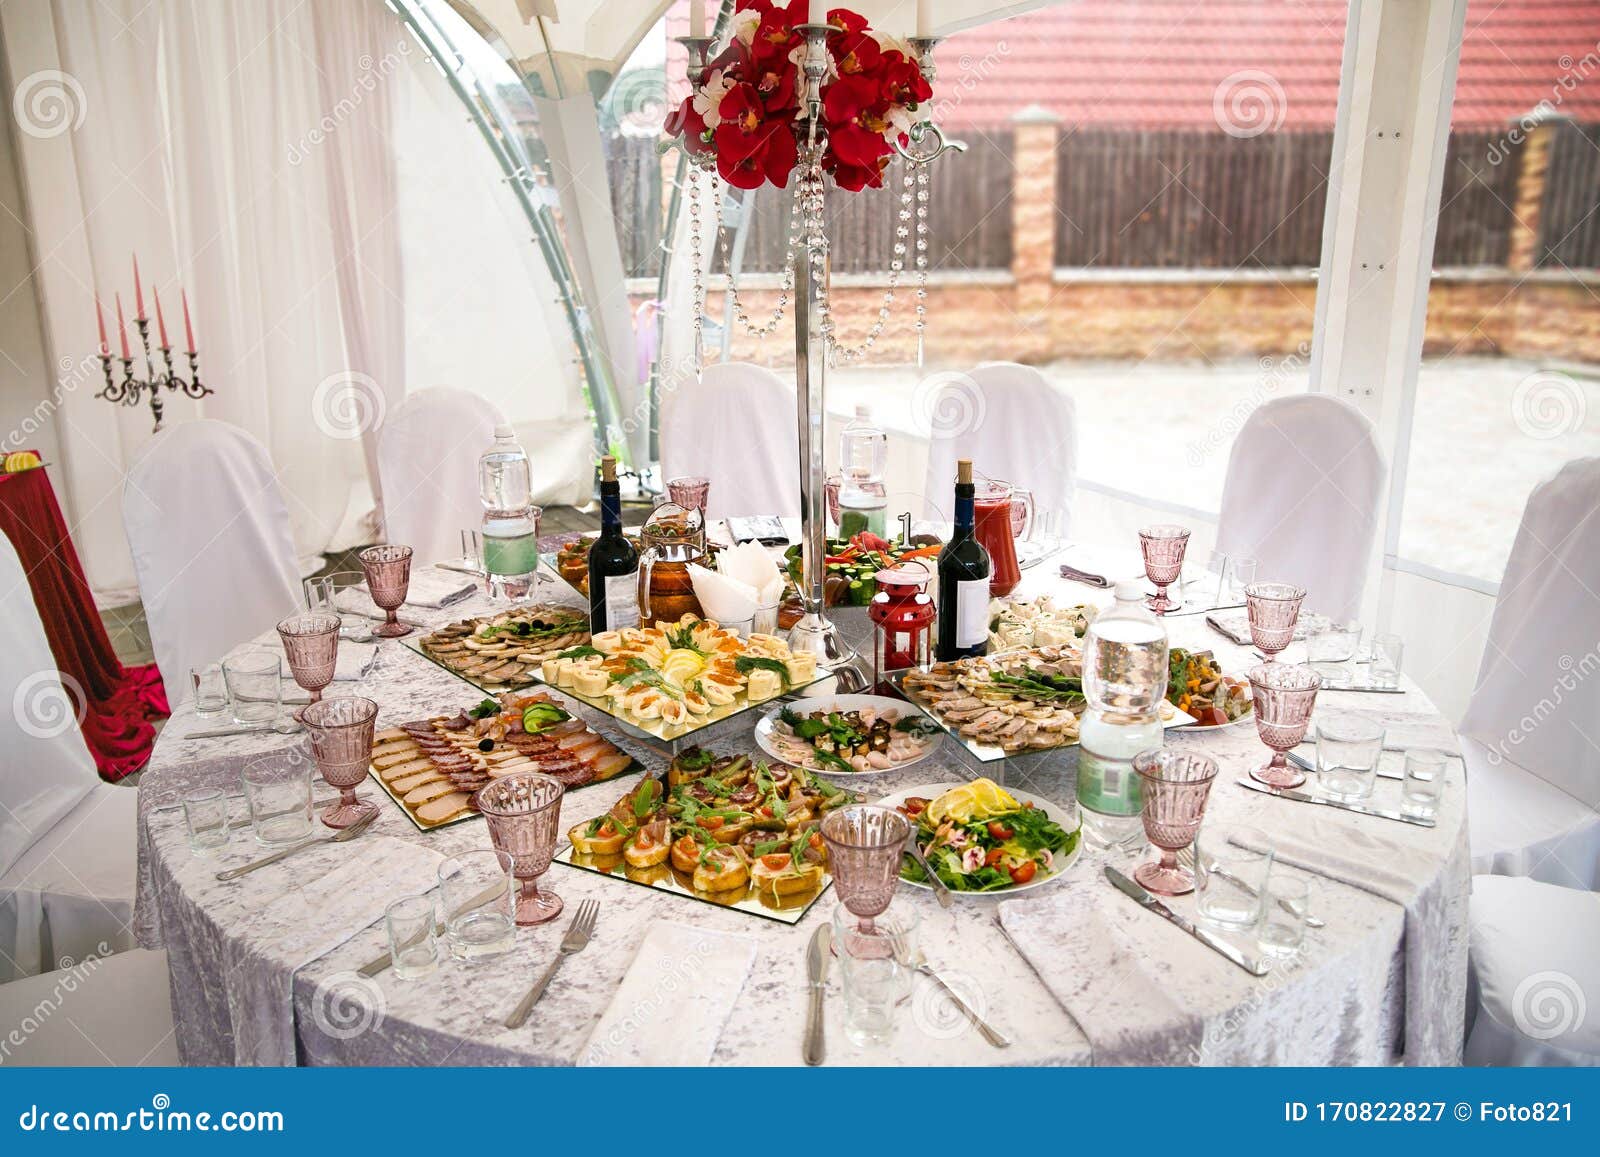 festive table setting